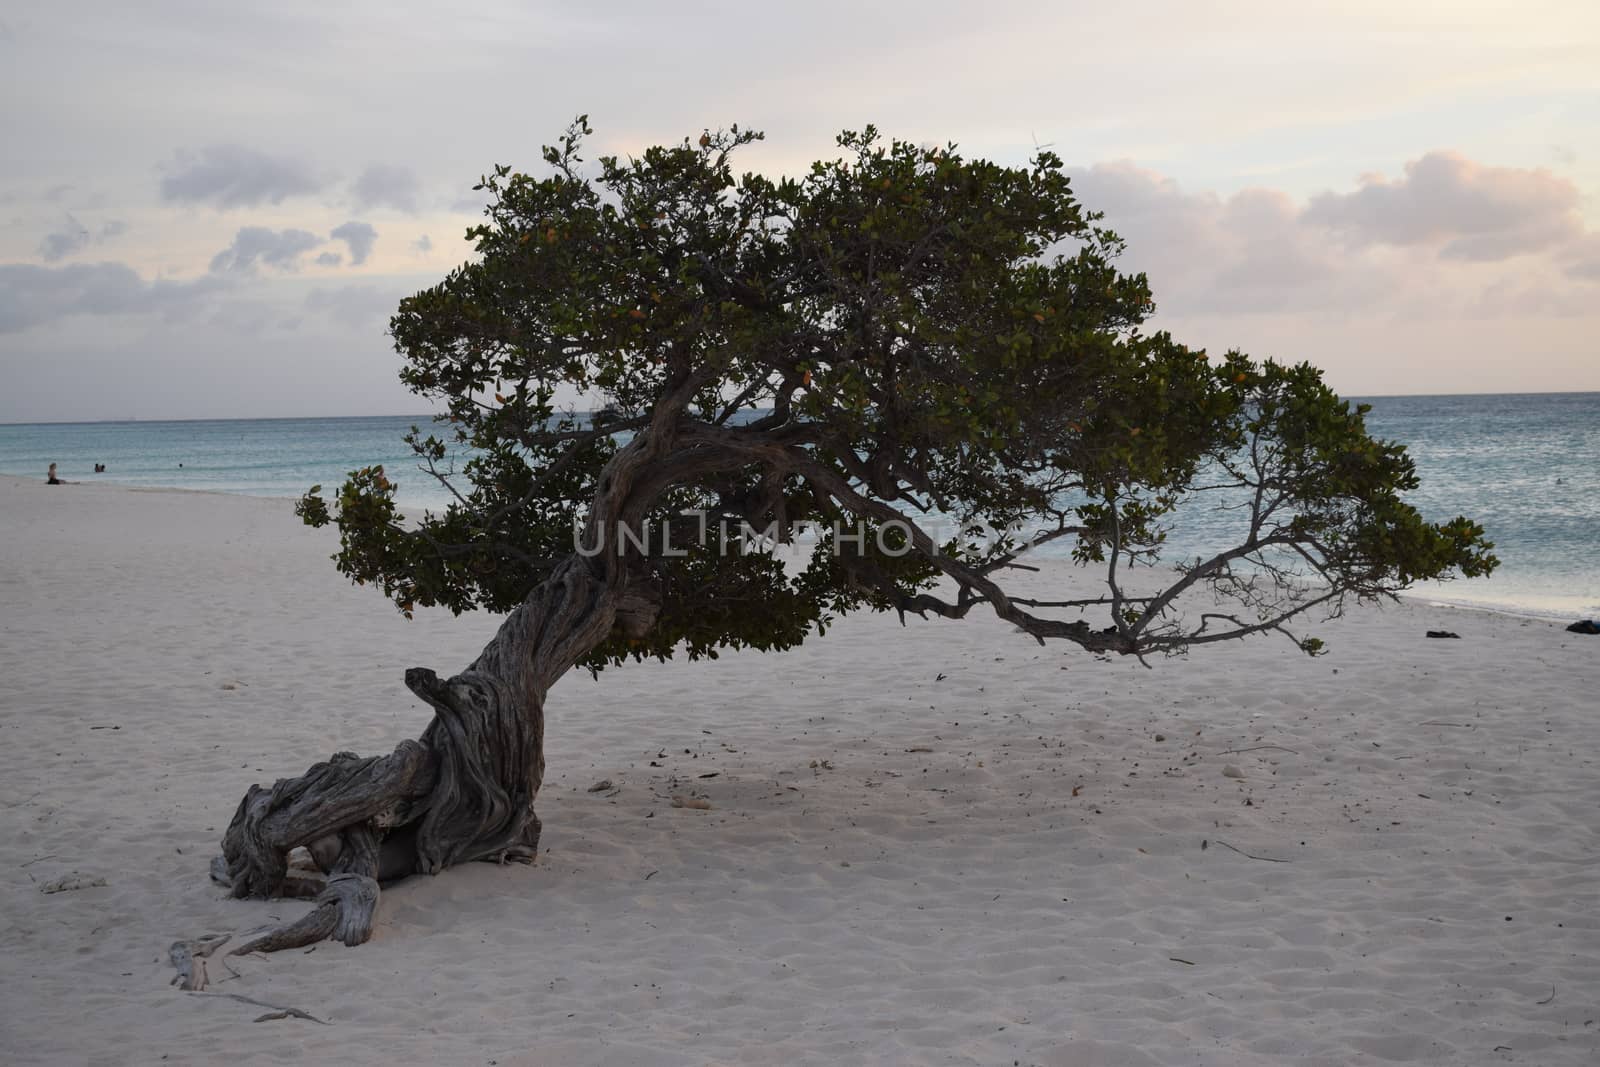 Divi trees on the beach of Aruba Island at sunset